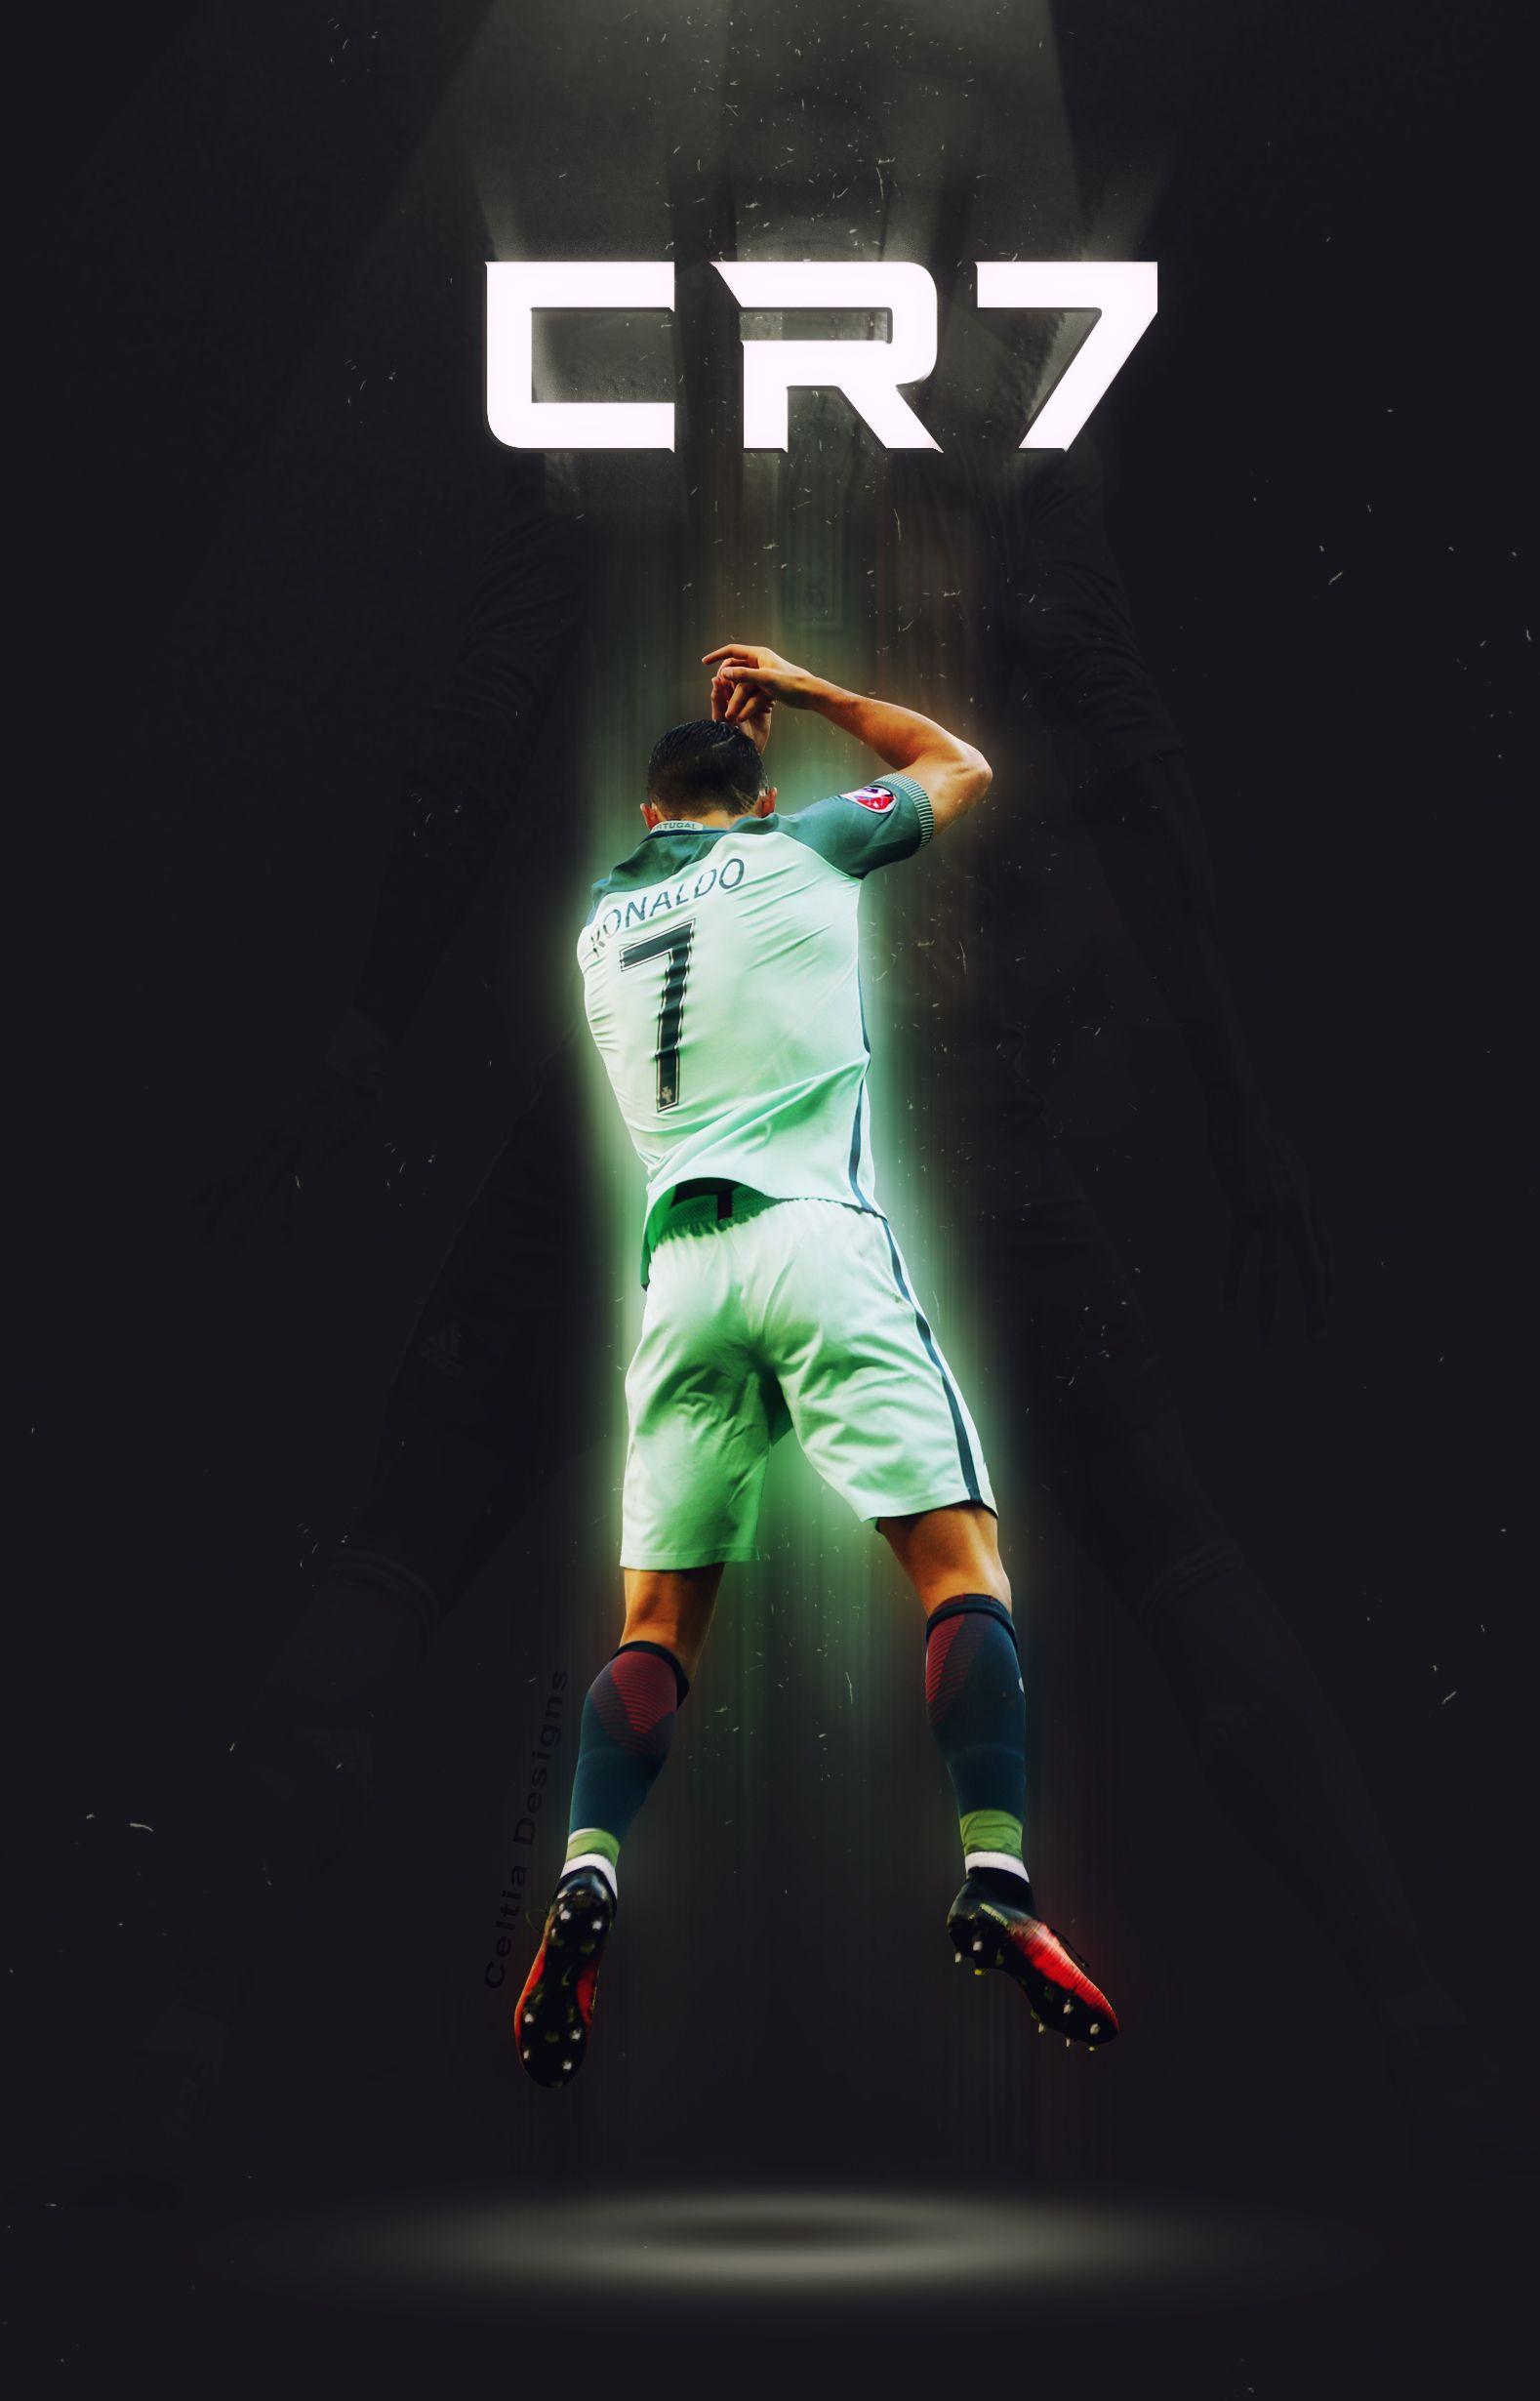 23 Cristiano Ronaldo Logo Wallpapers  WallpaperSafari